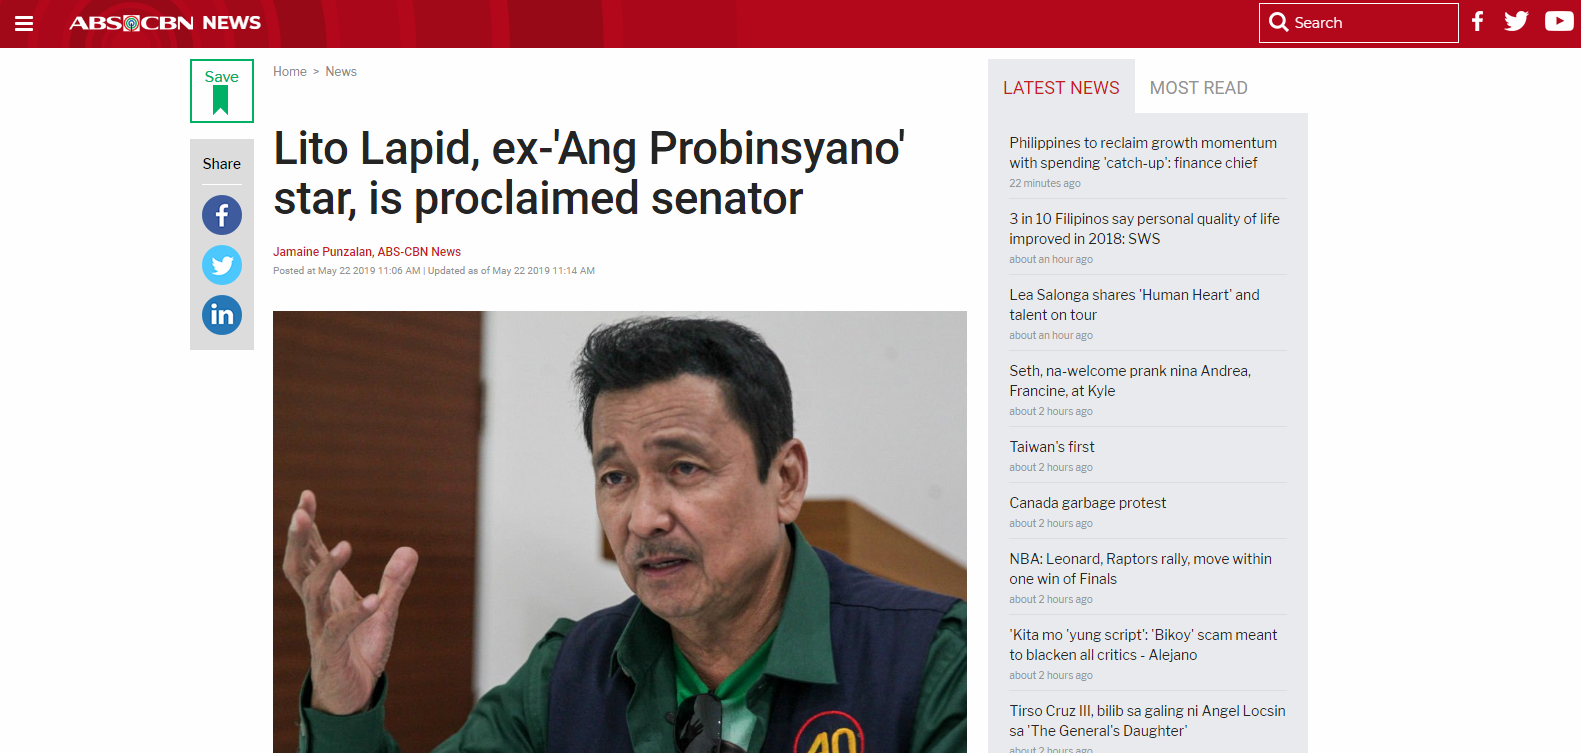 Lito Lapid, ex-’Ang Probinsyano’ star, is proclaimed senator